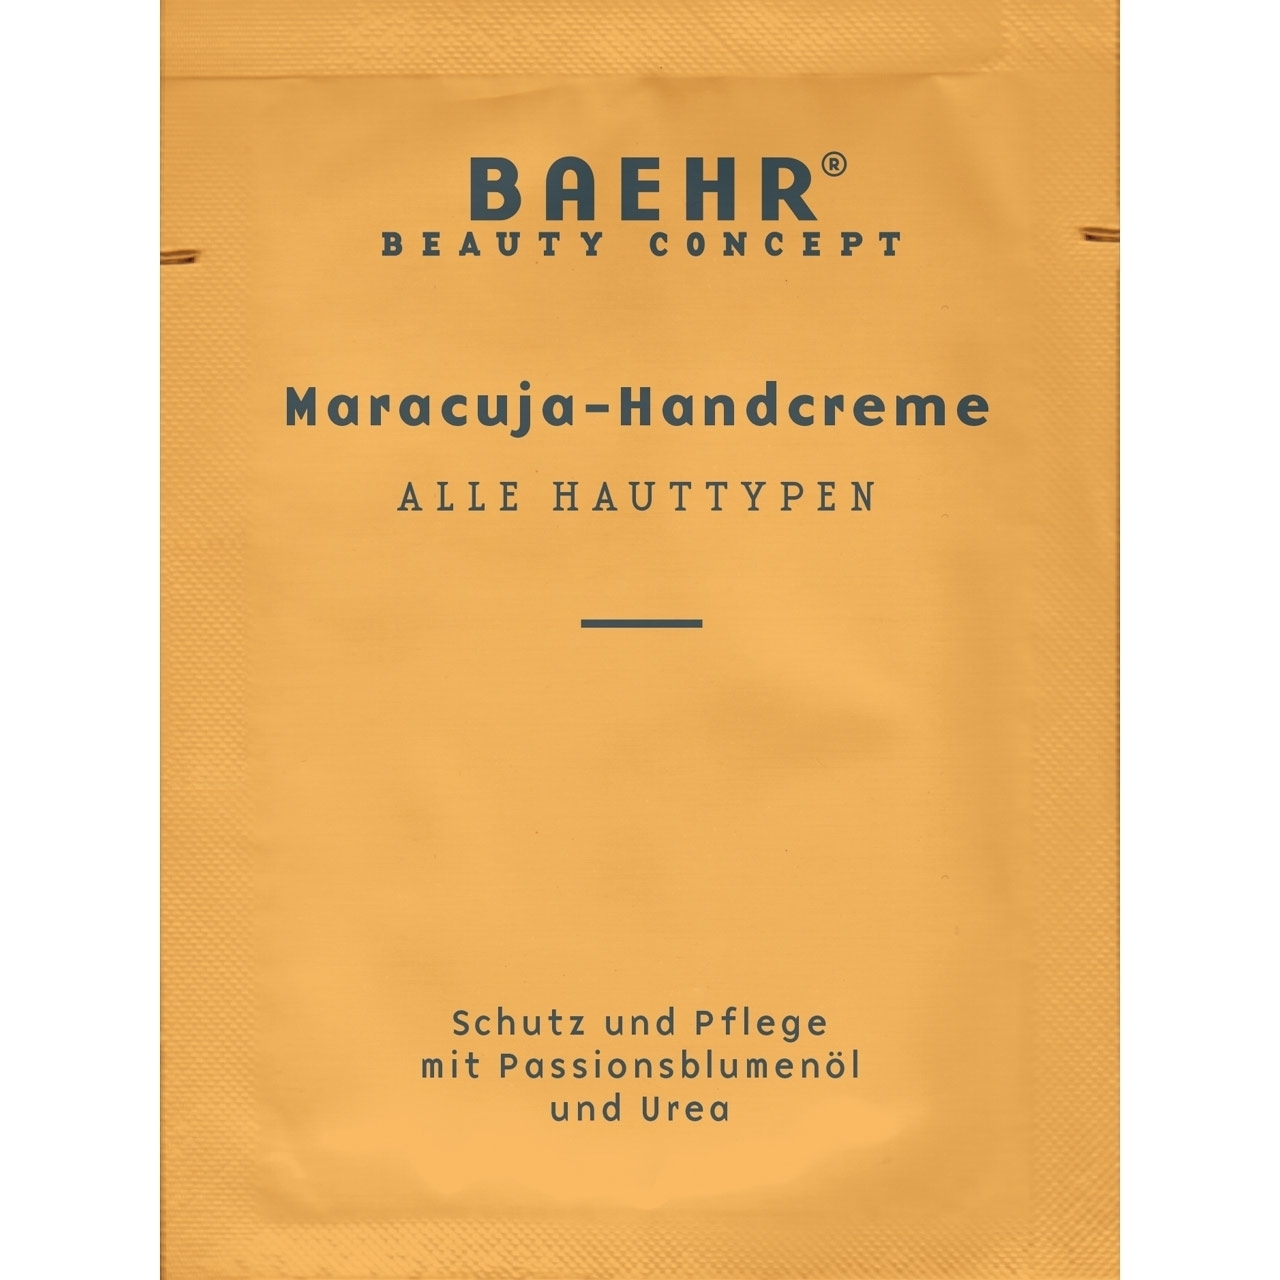 BAEHR BEAUTY CONCEPT - Maracuja-Handcreme Probe